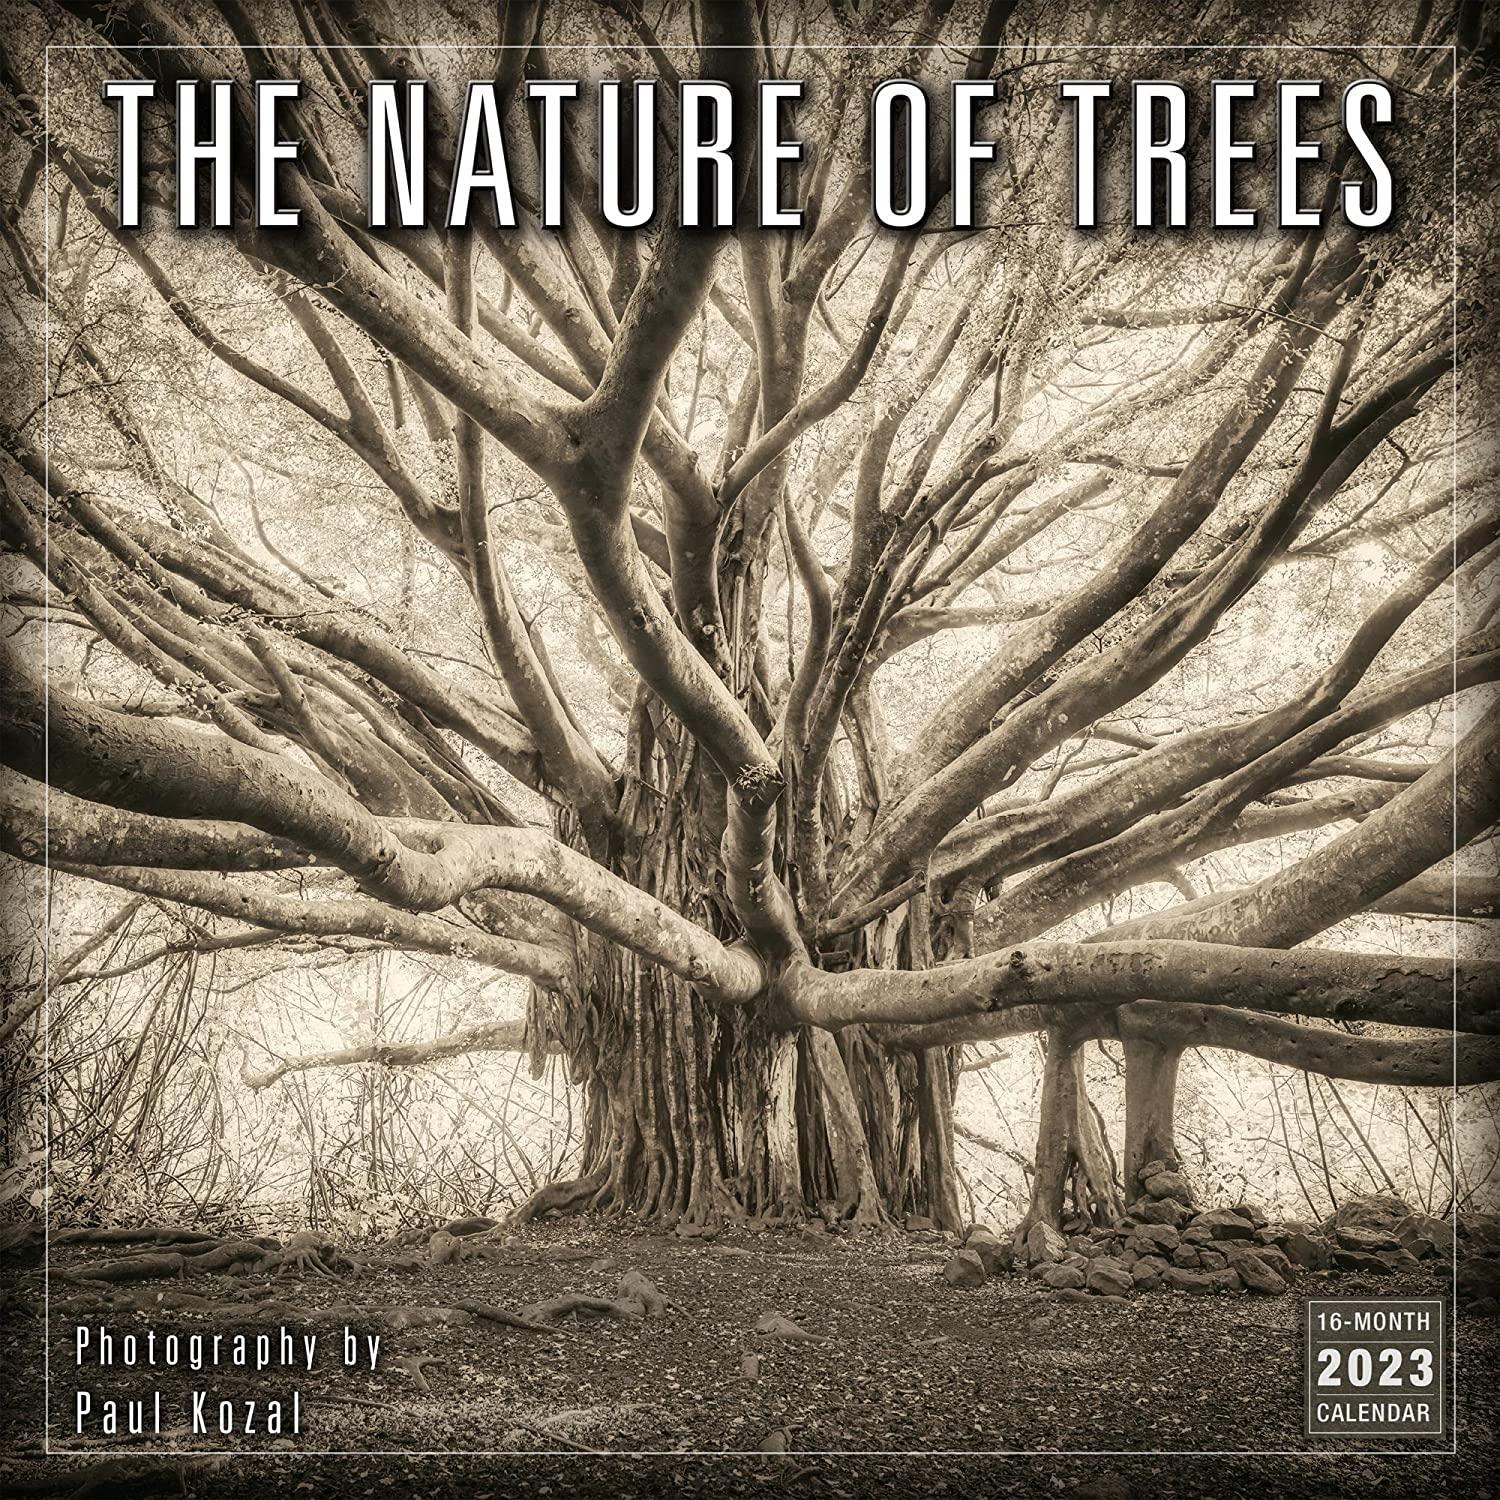 into-the-forest-2020-calendar-by-miguel-santos-on-deviantart-fantasy